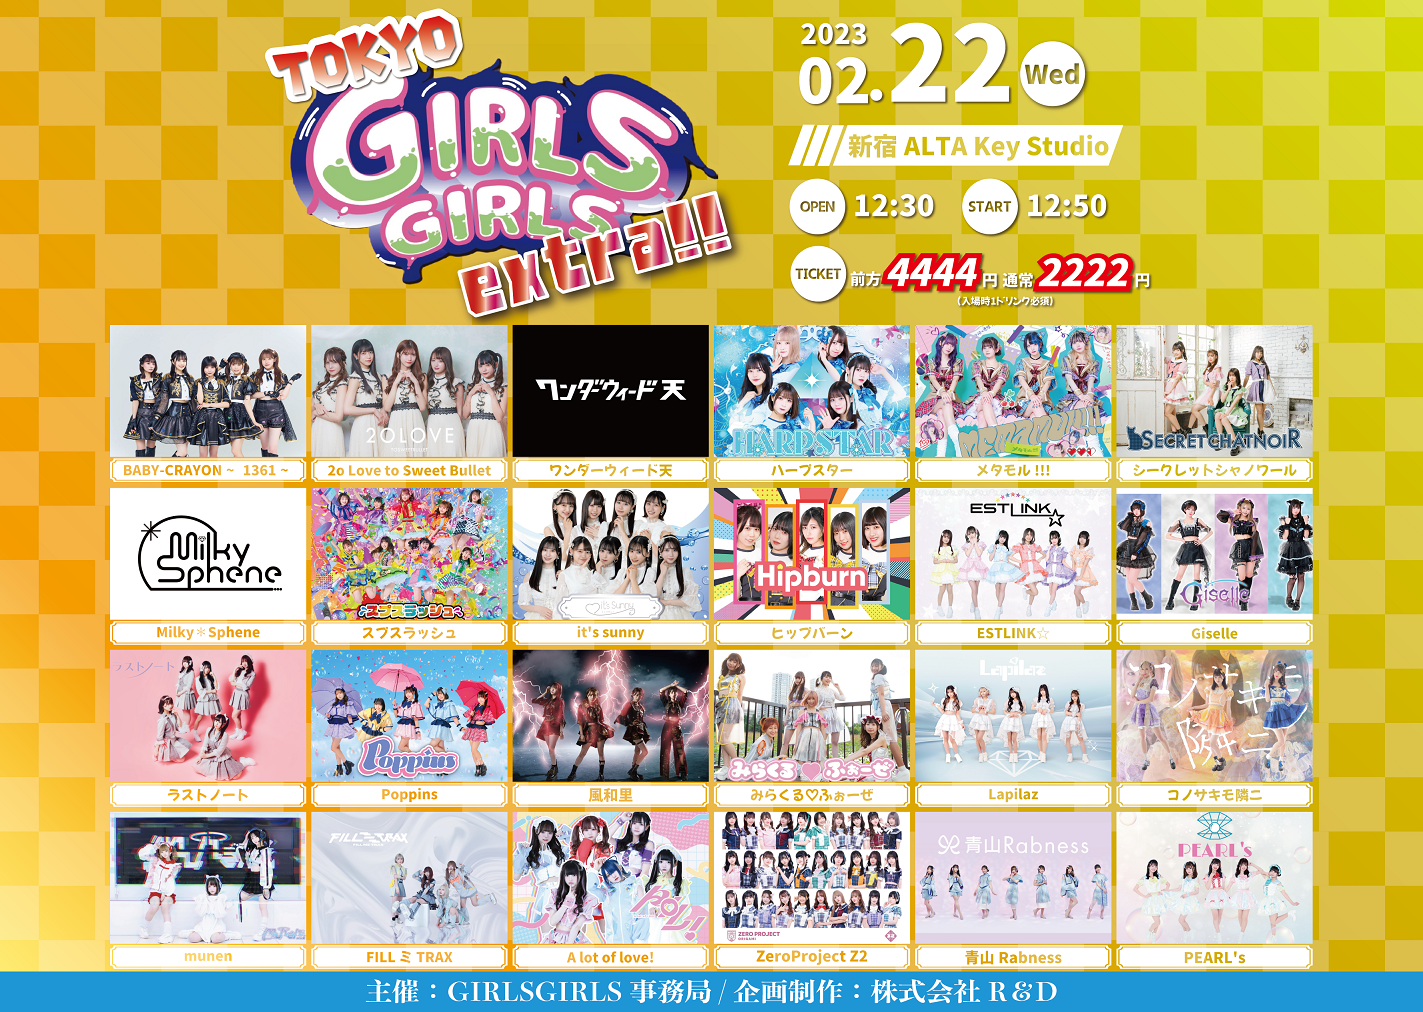 TOKYO GIRLS GIRLS extra!!